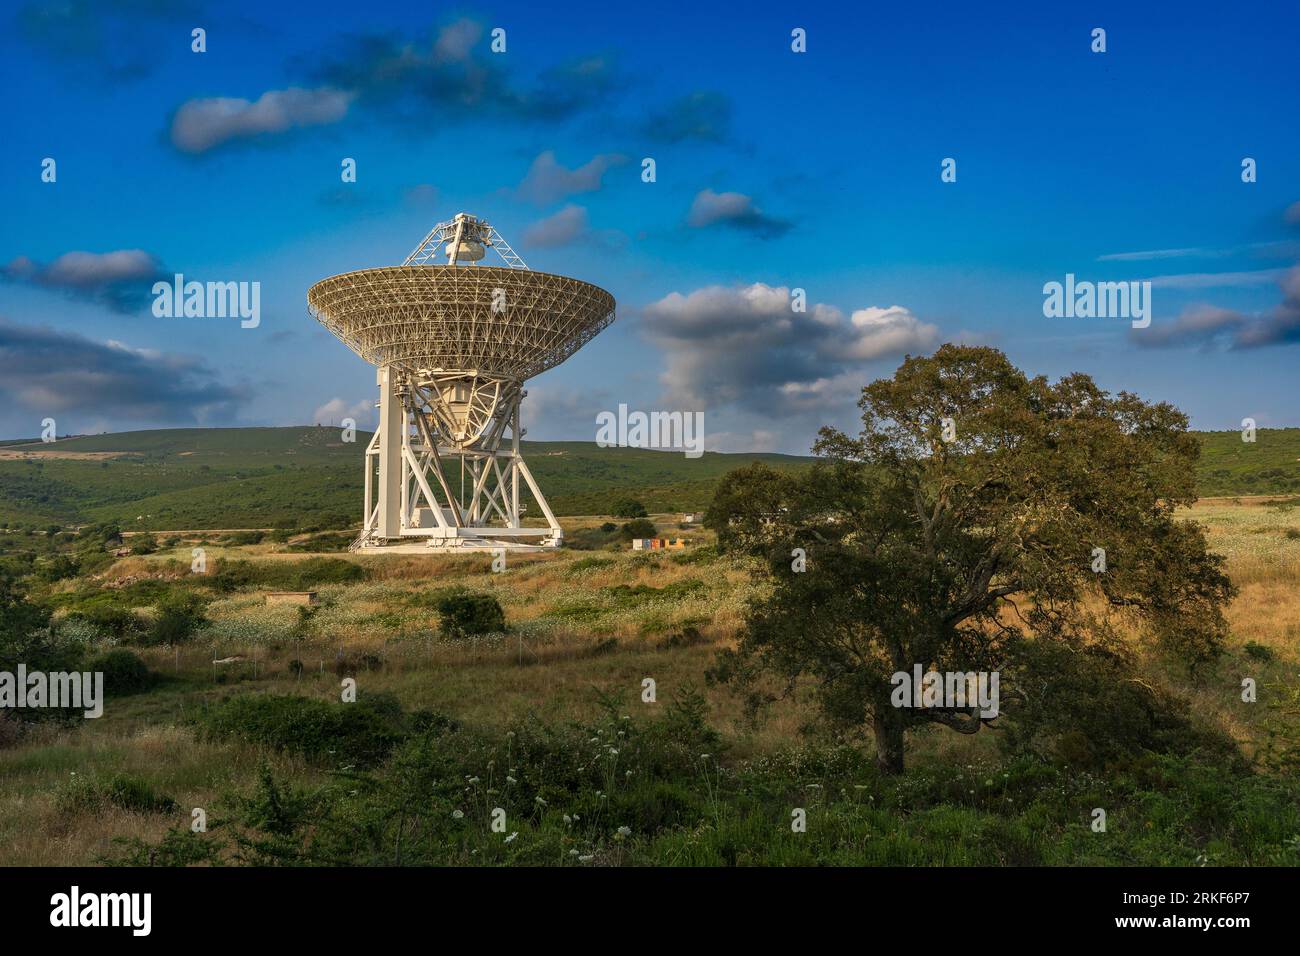 SRT - Sardinia Radio Telescope Stock Photo